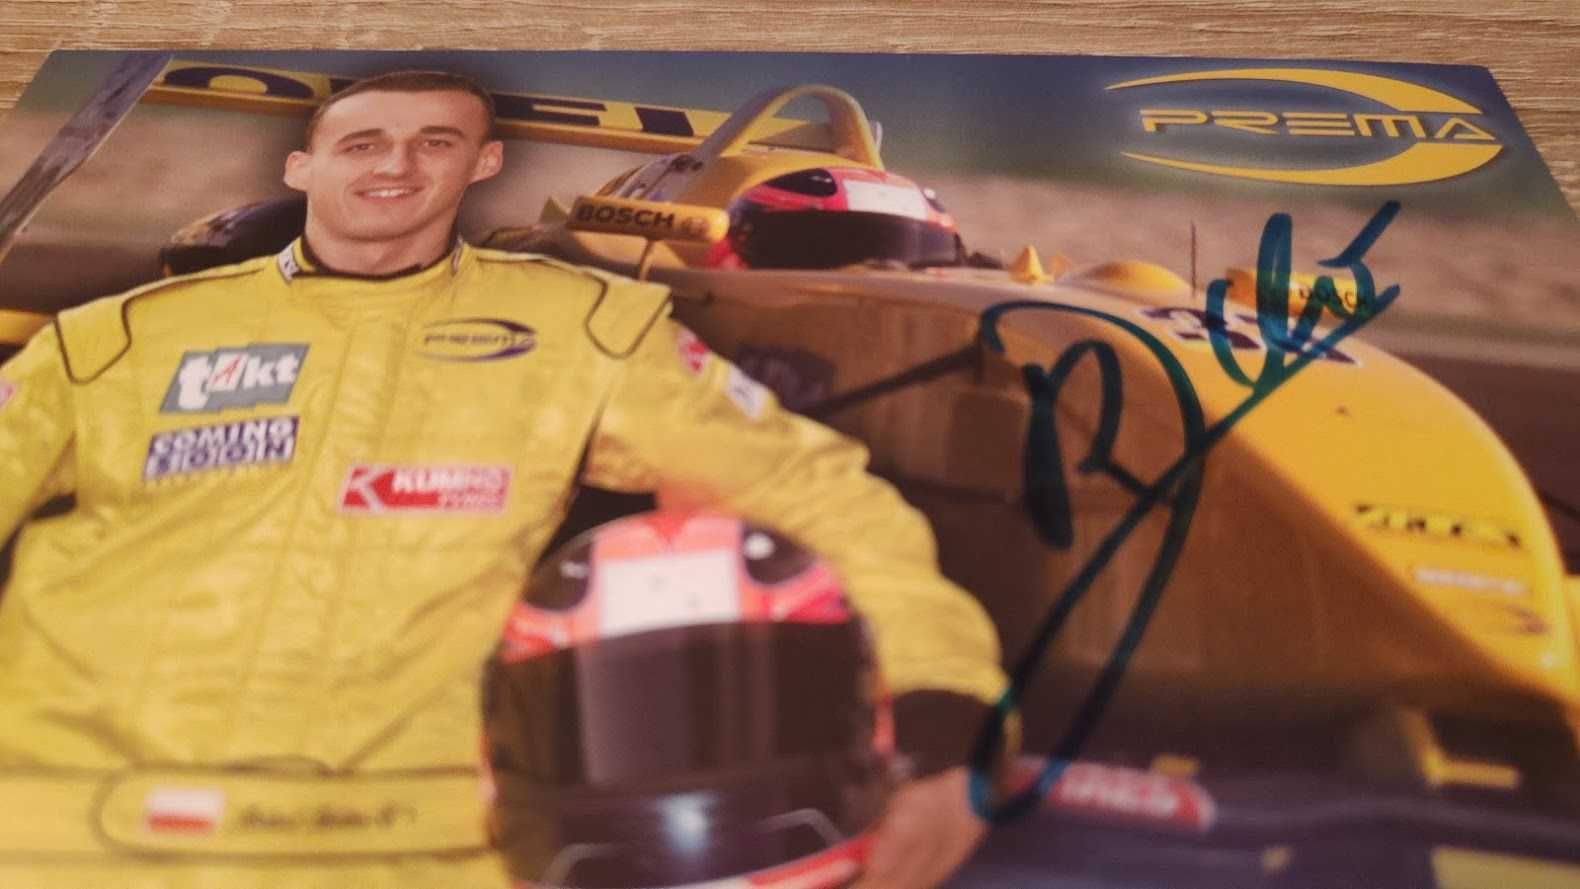 Karta Robert Kubica Autograf Podpis Prema Powerteam F3 Oryginalna 2003